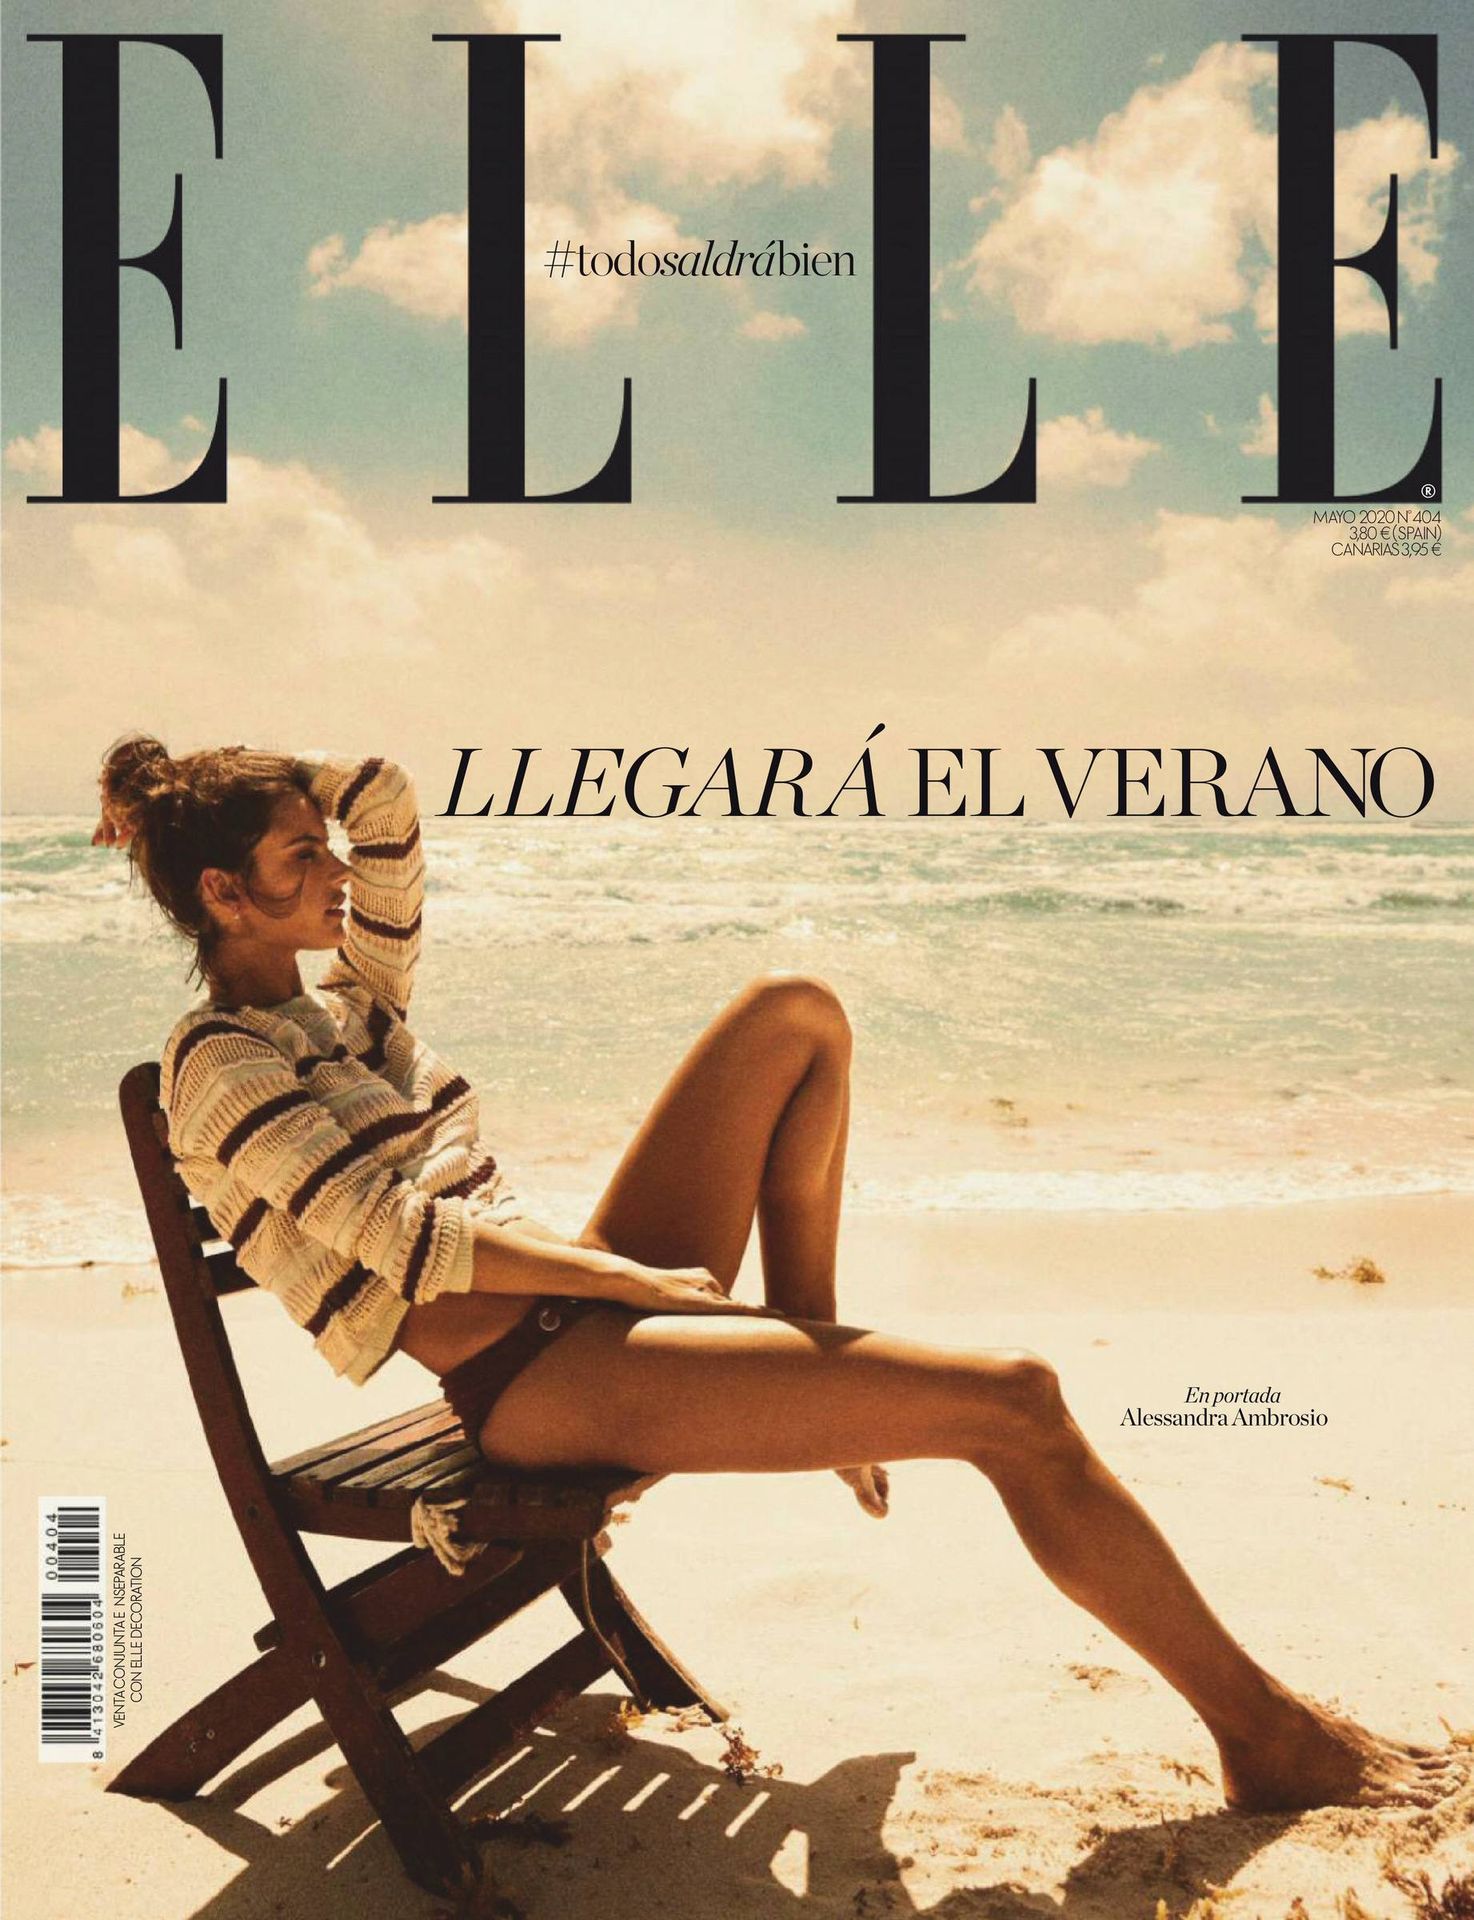 Alessandra Ambrosio in Elle Spain! - Photo 3